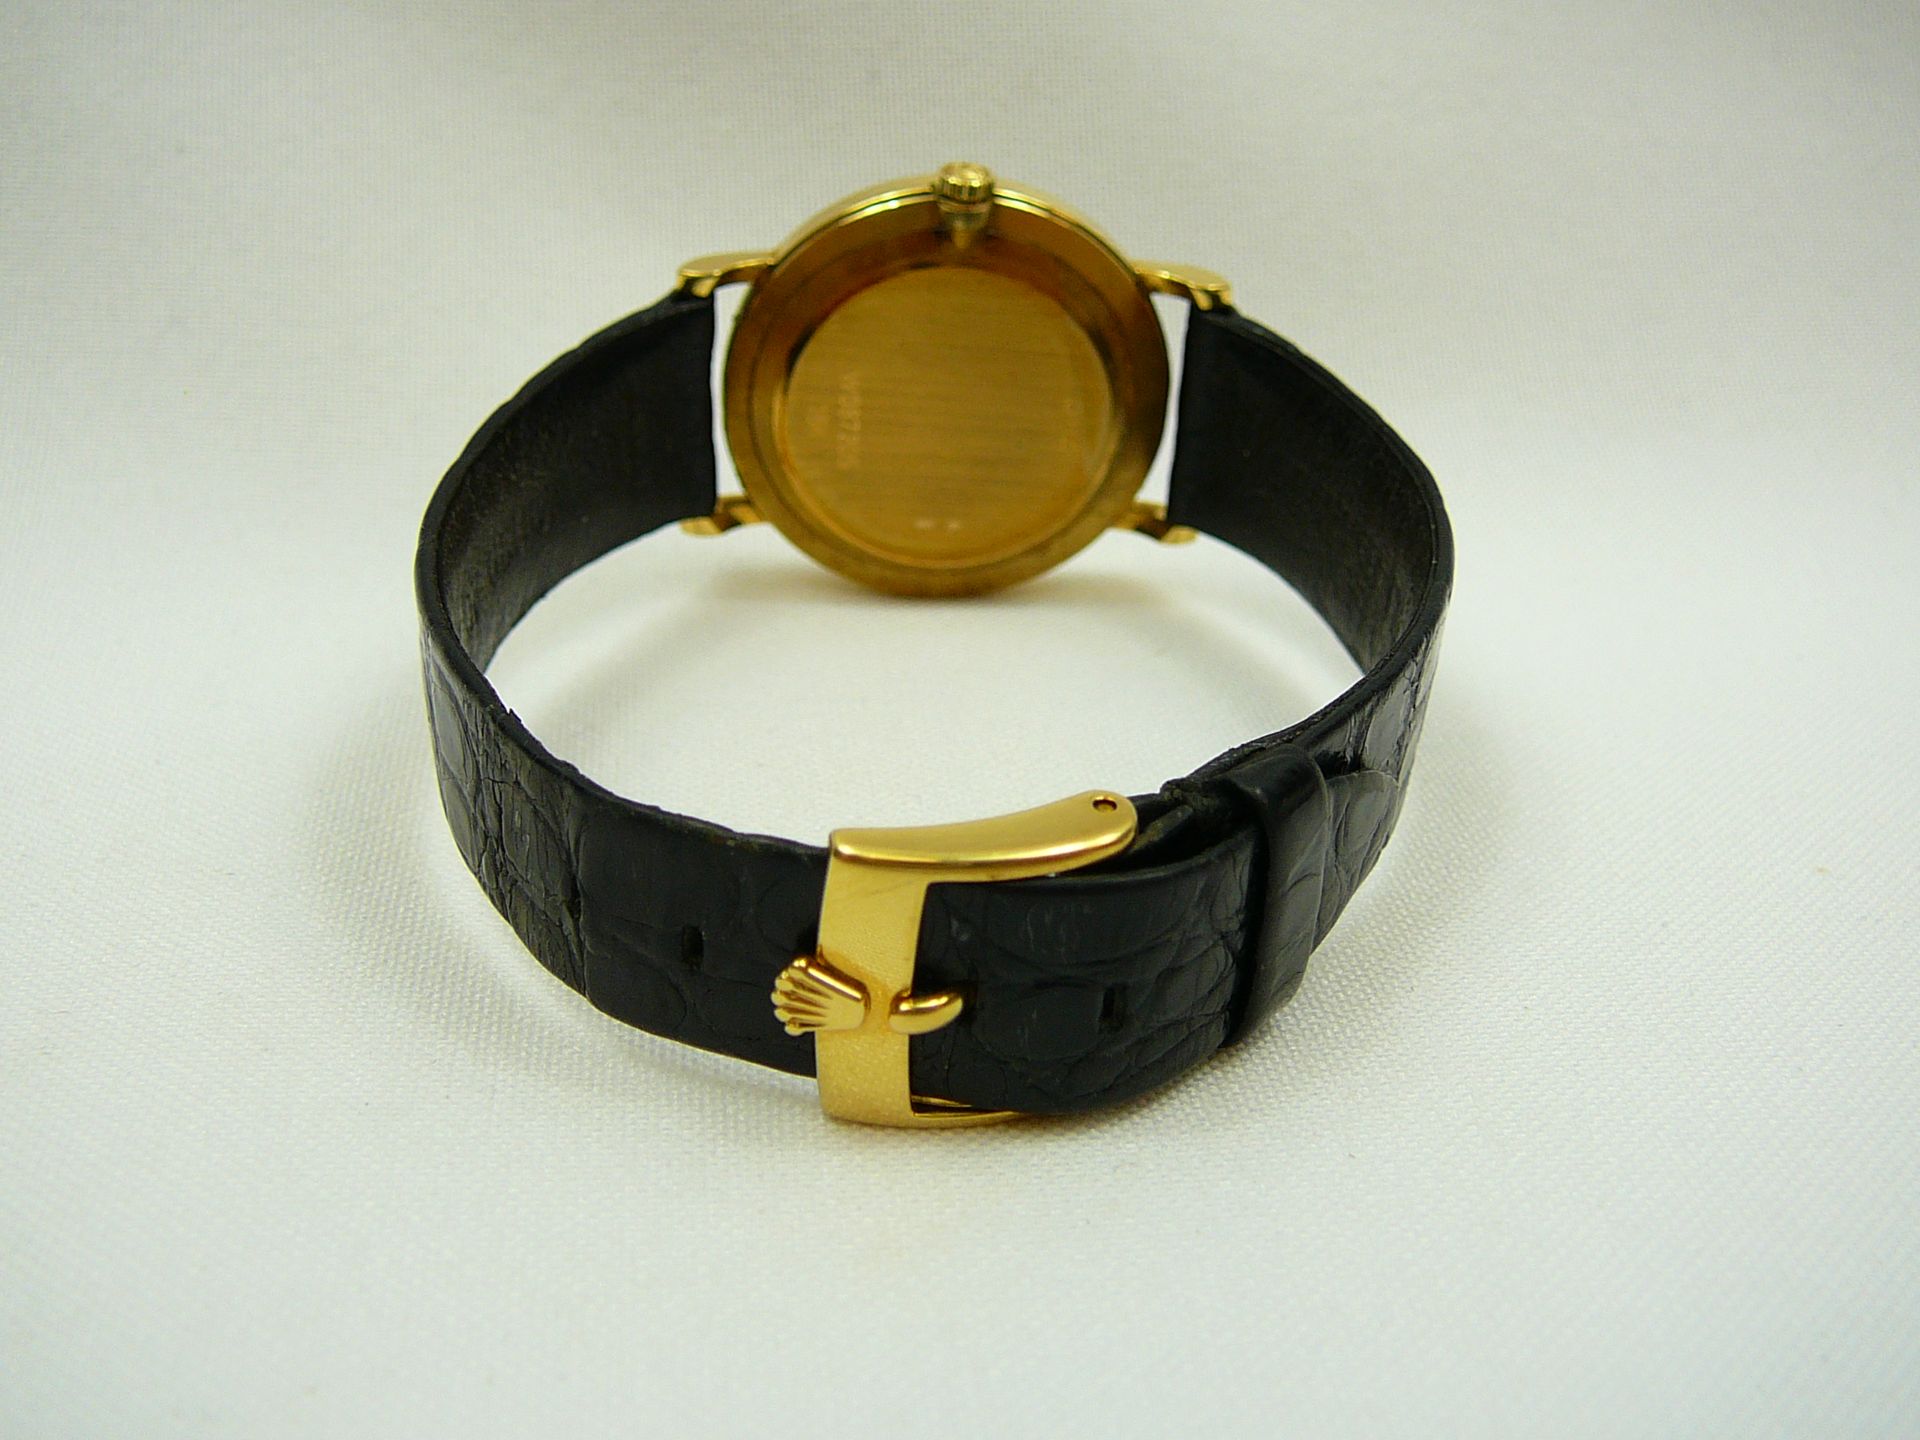 Gents Gold Rolex Wristwatch - Image 3 of 5